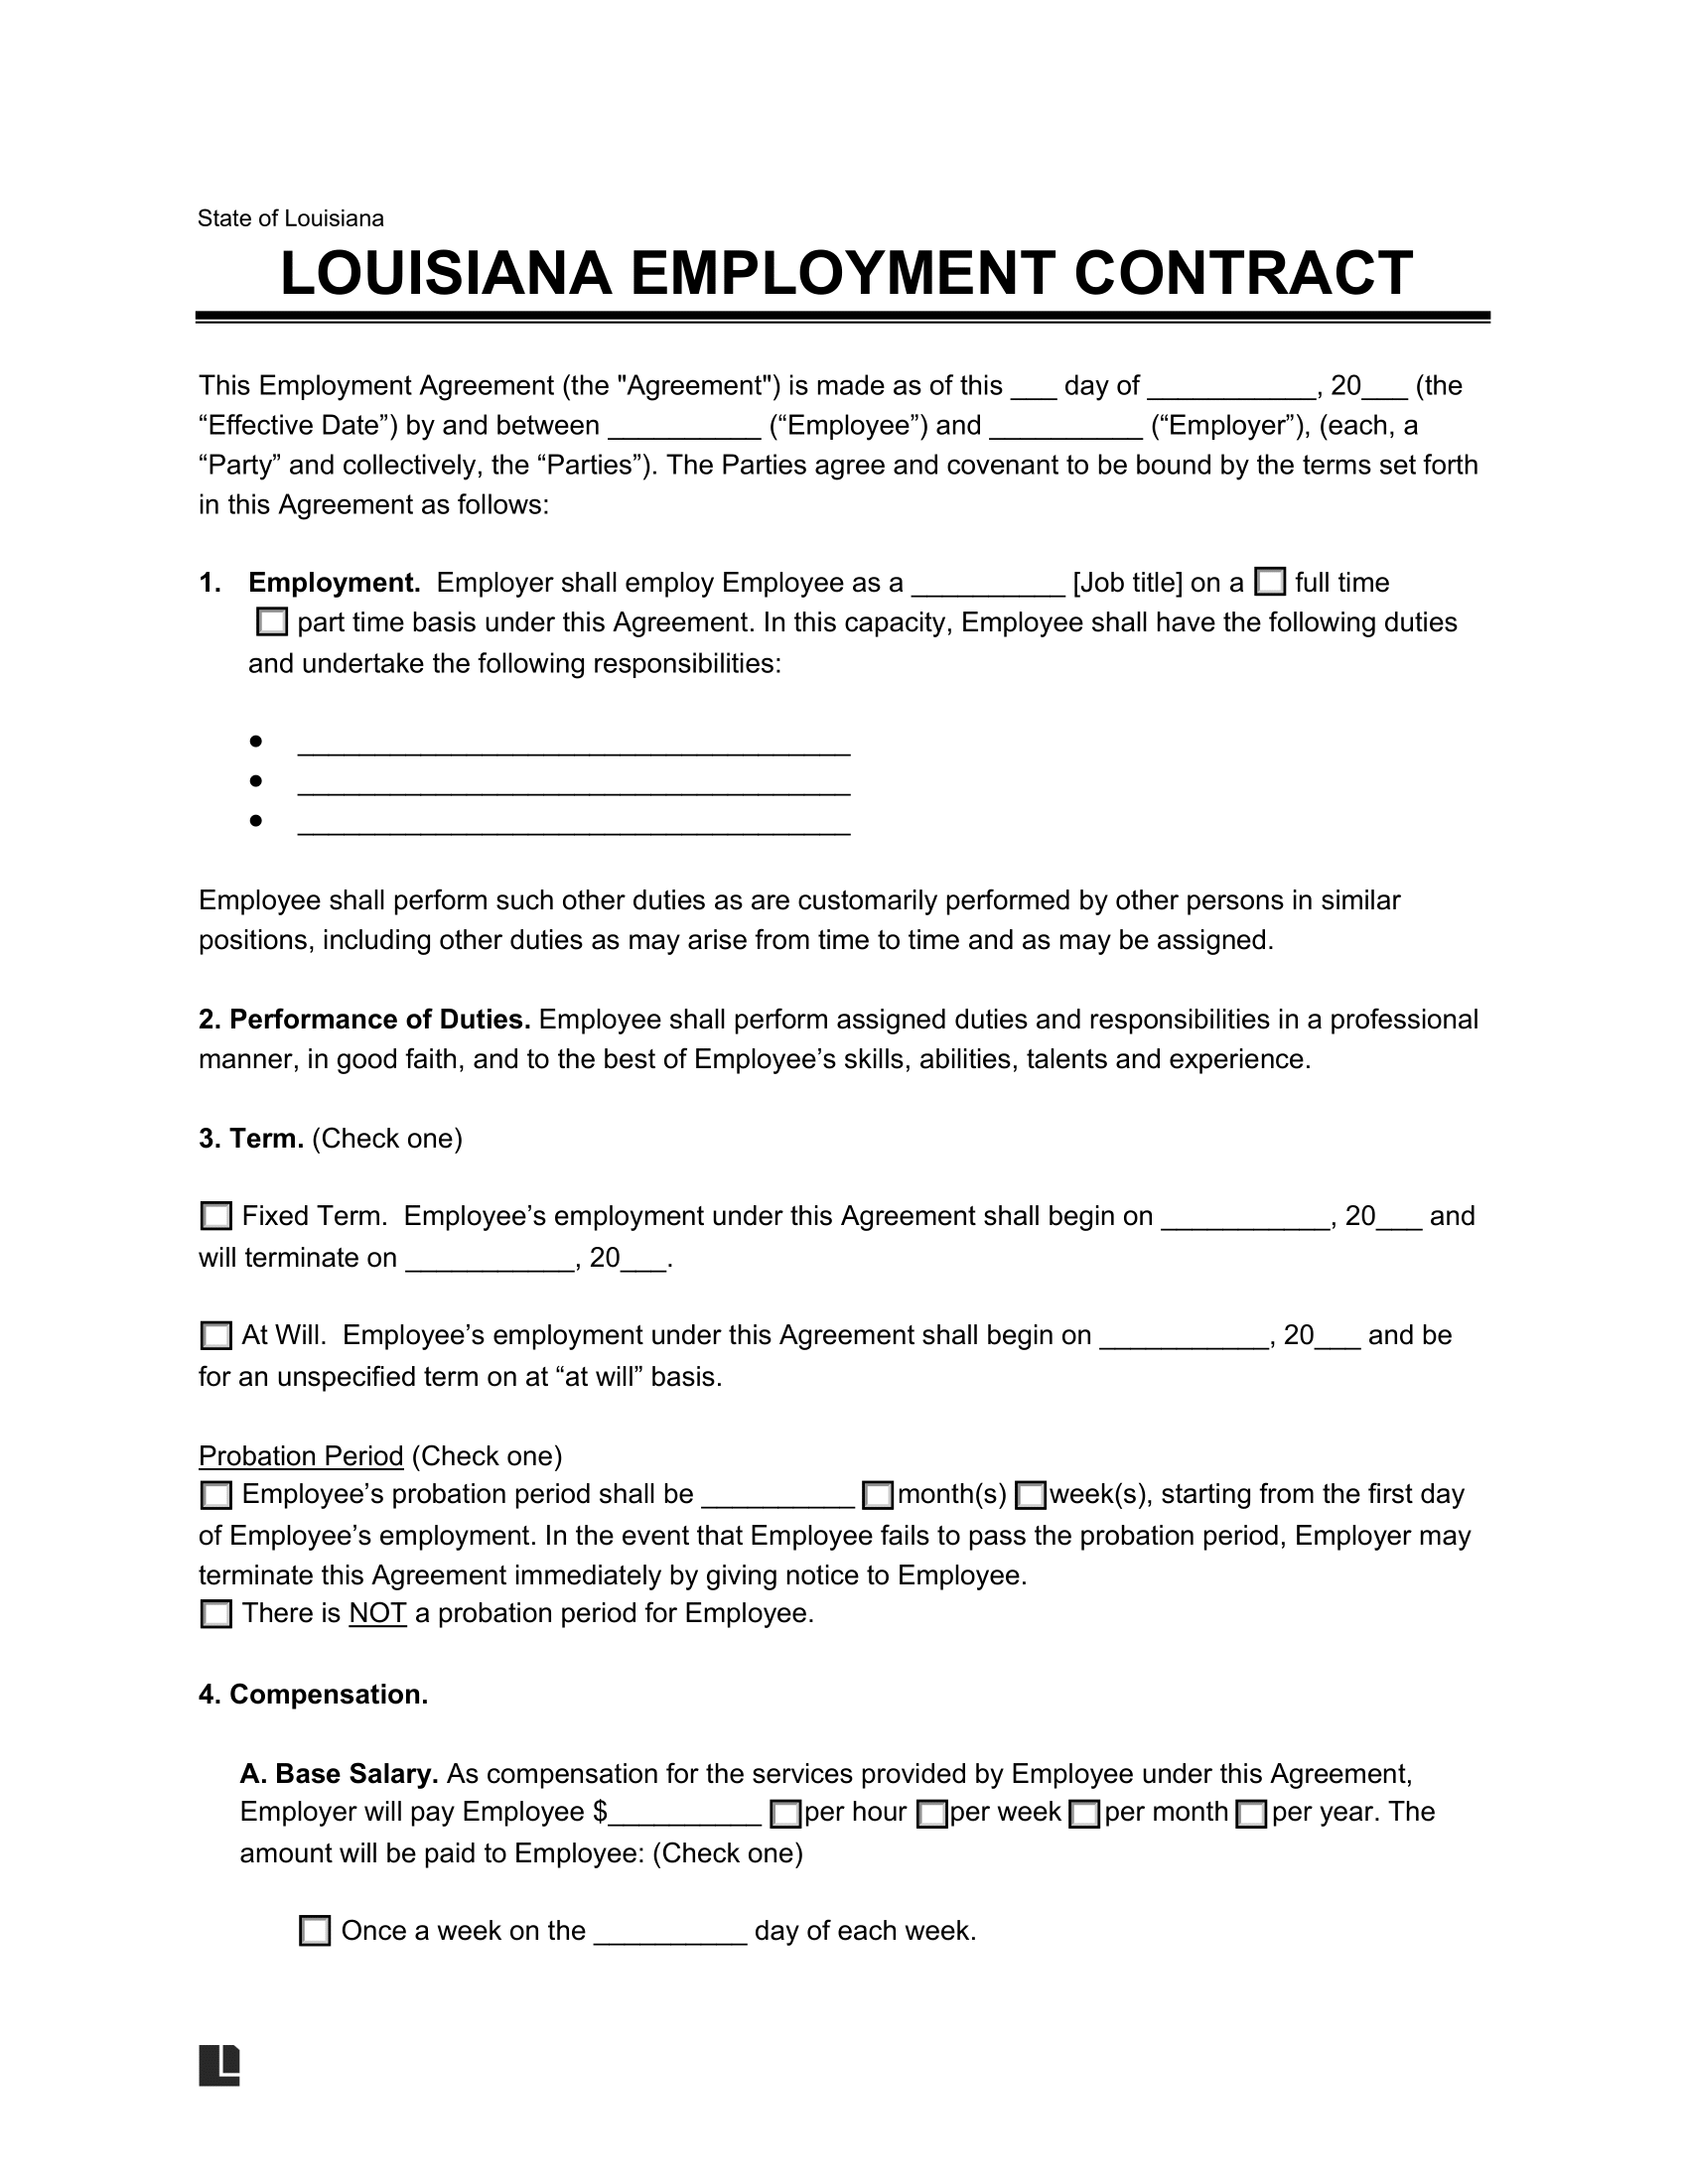 louisiana employment contract template